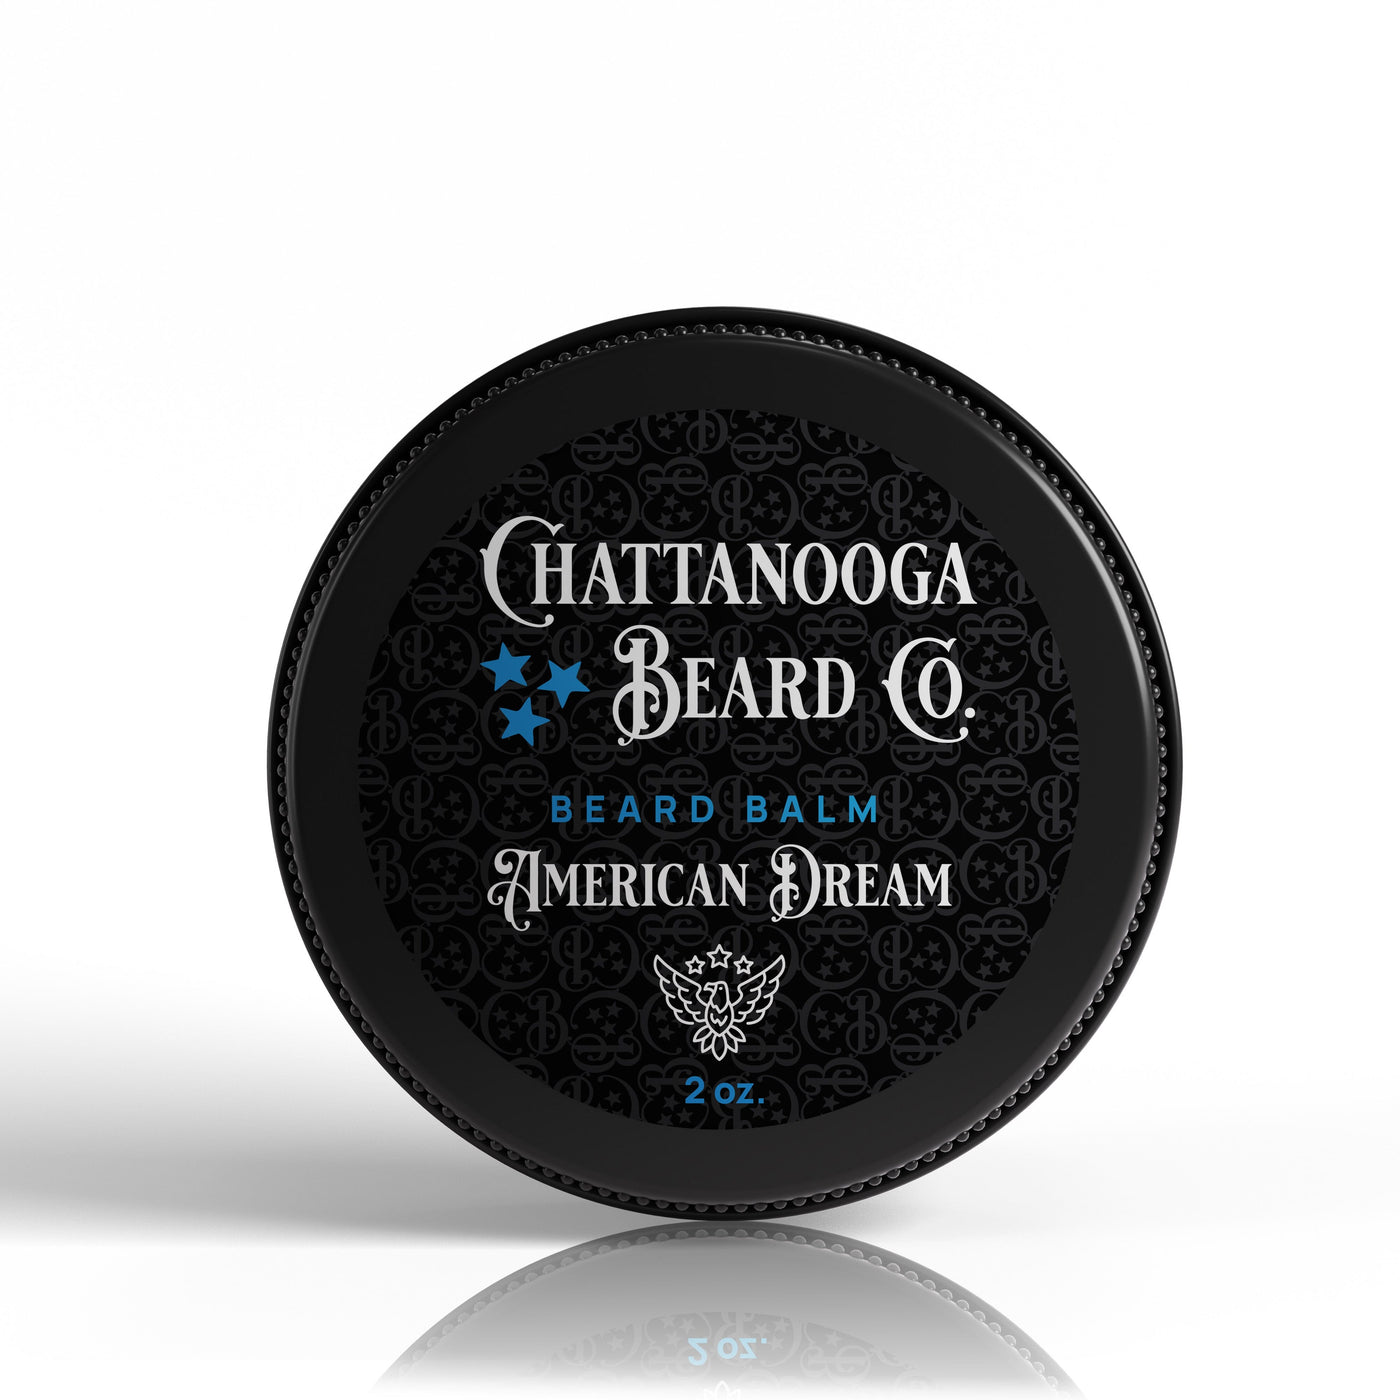 Chattanooga Beard Co. - Beard Balm Balm Chattanooga Beard Co. American Dream 